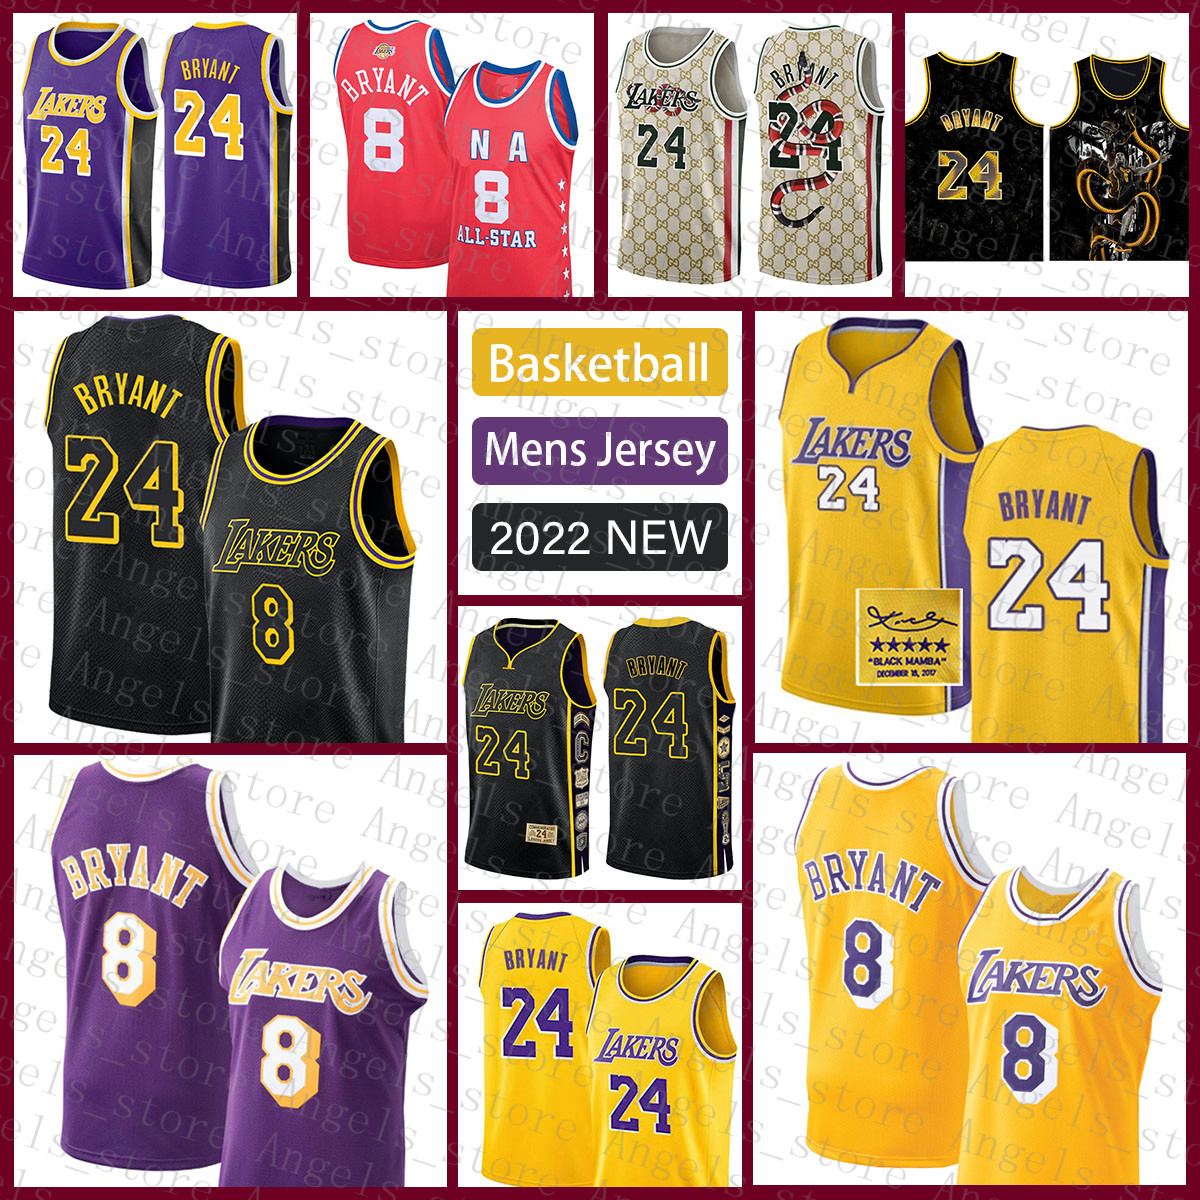 

Basketball Jersey 23 6 3 0 Bryant Los Angeles''Lakers''Kobe''Black Mamba 24 8 LeBron James Anthony Russell Westbrook Davis 803, Youth jersey